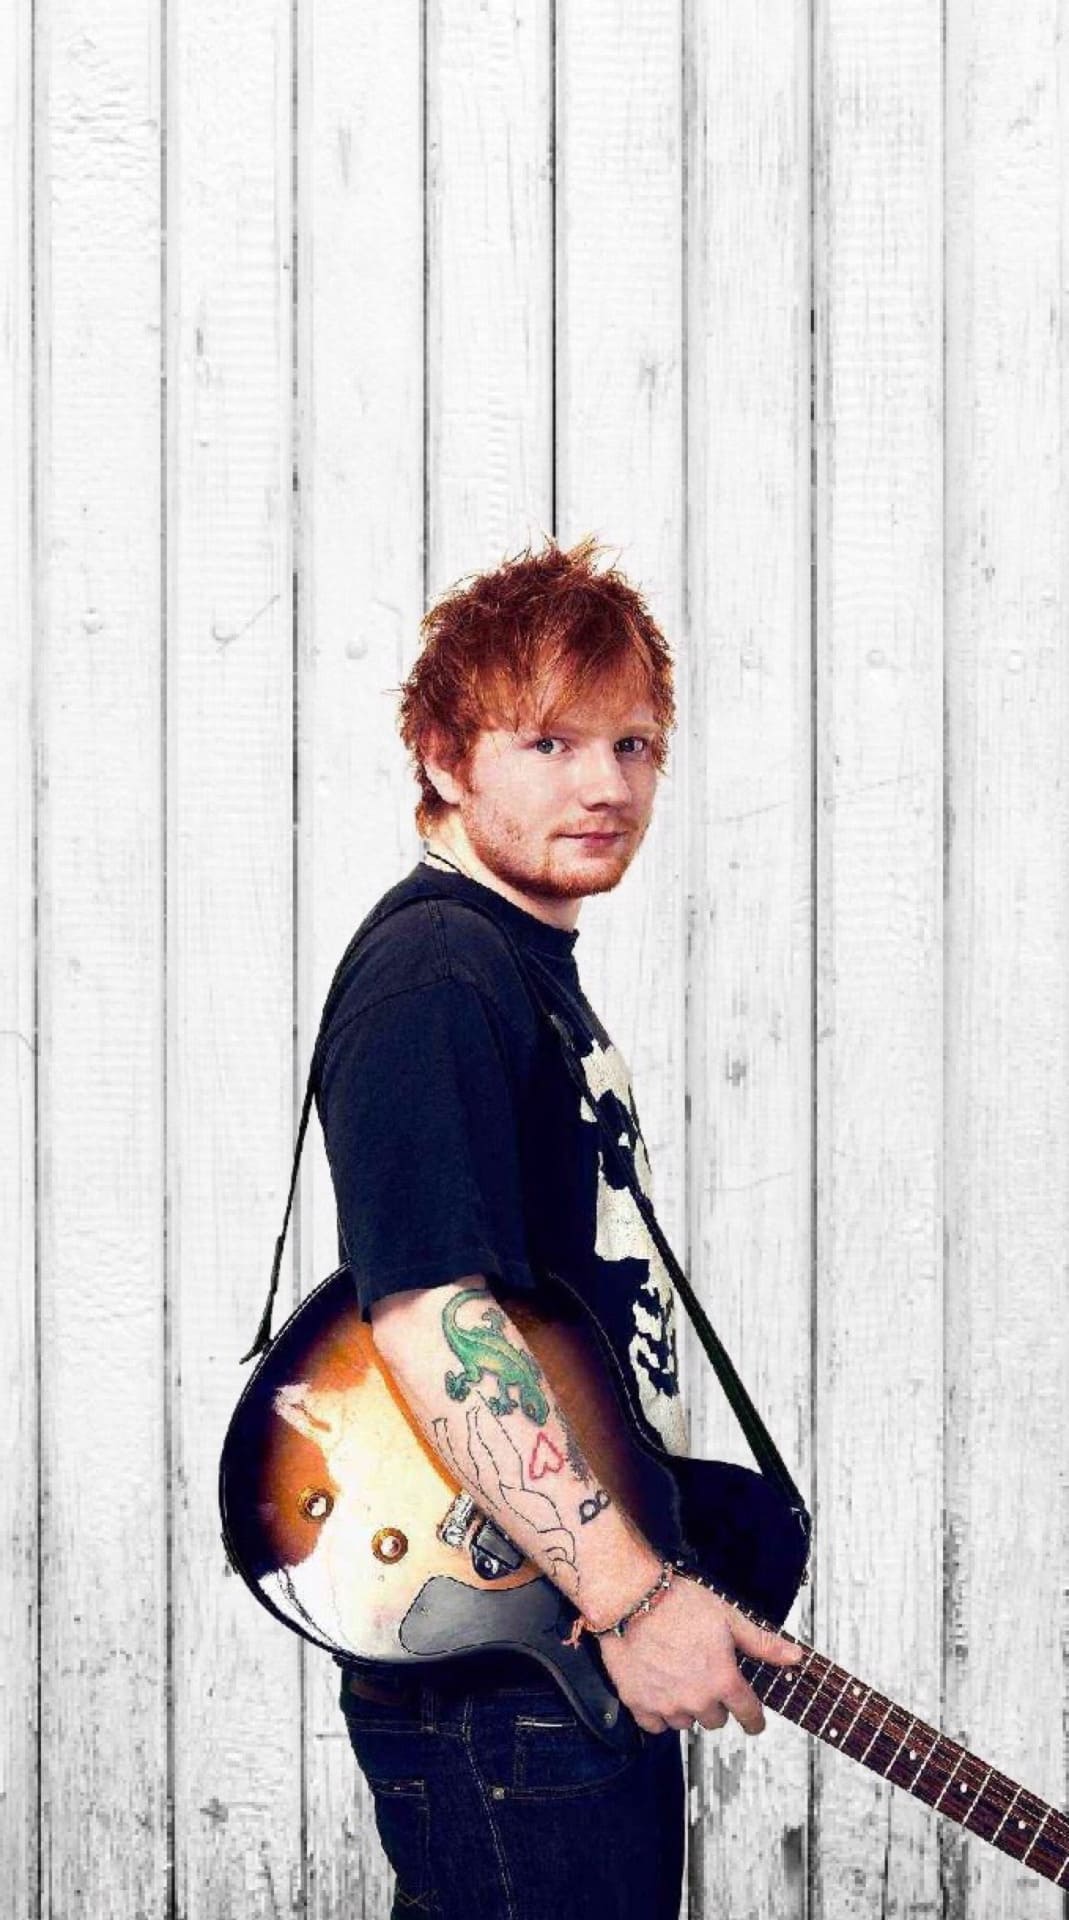 Ed Sheeran Mobile Wallpaper 4k Quality Ed Sheeran Mobile Wallpaper Download